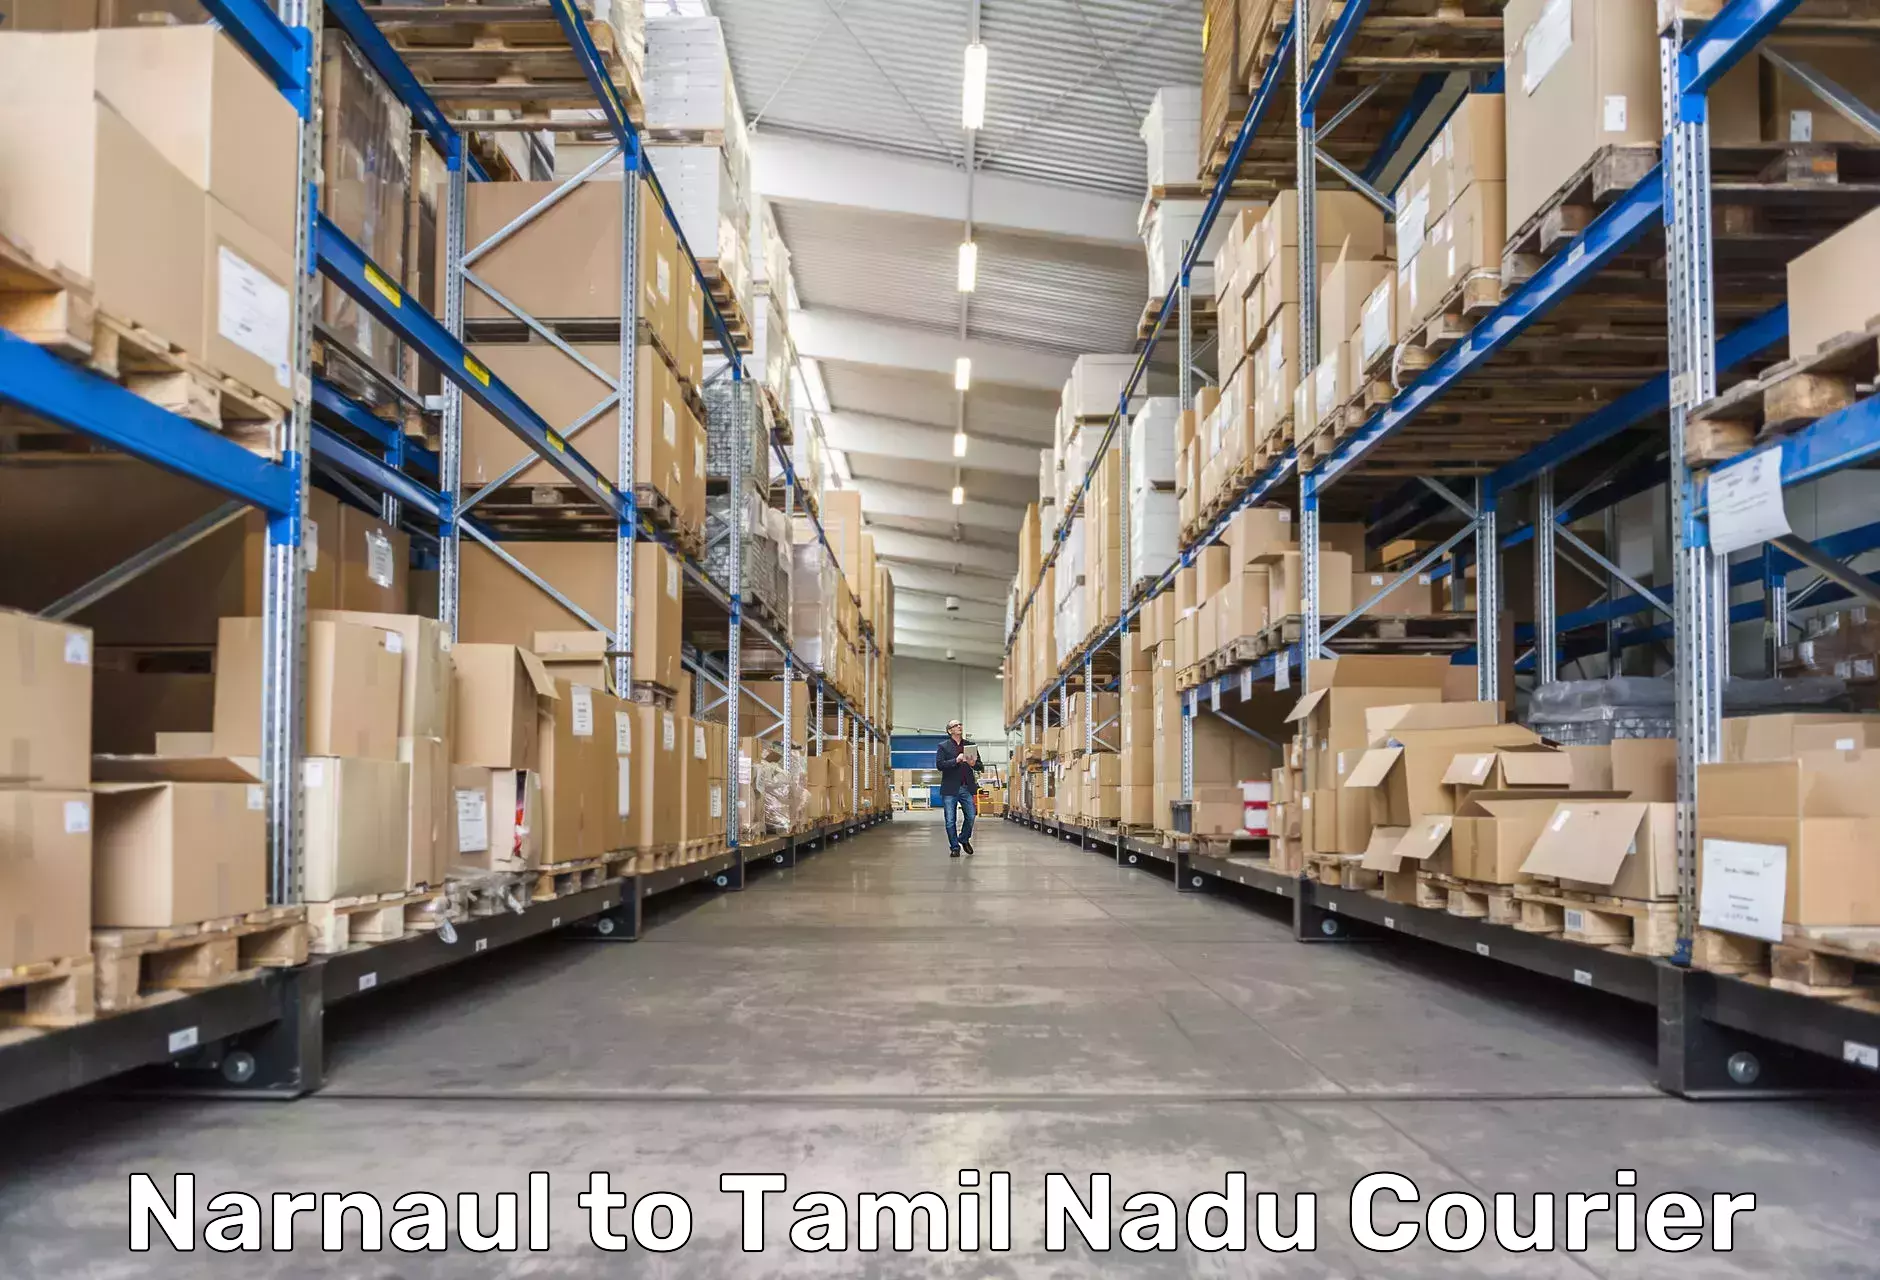 Package delivery network Narnaul to Sholinghur